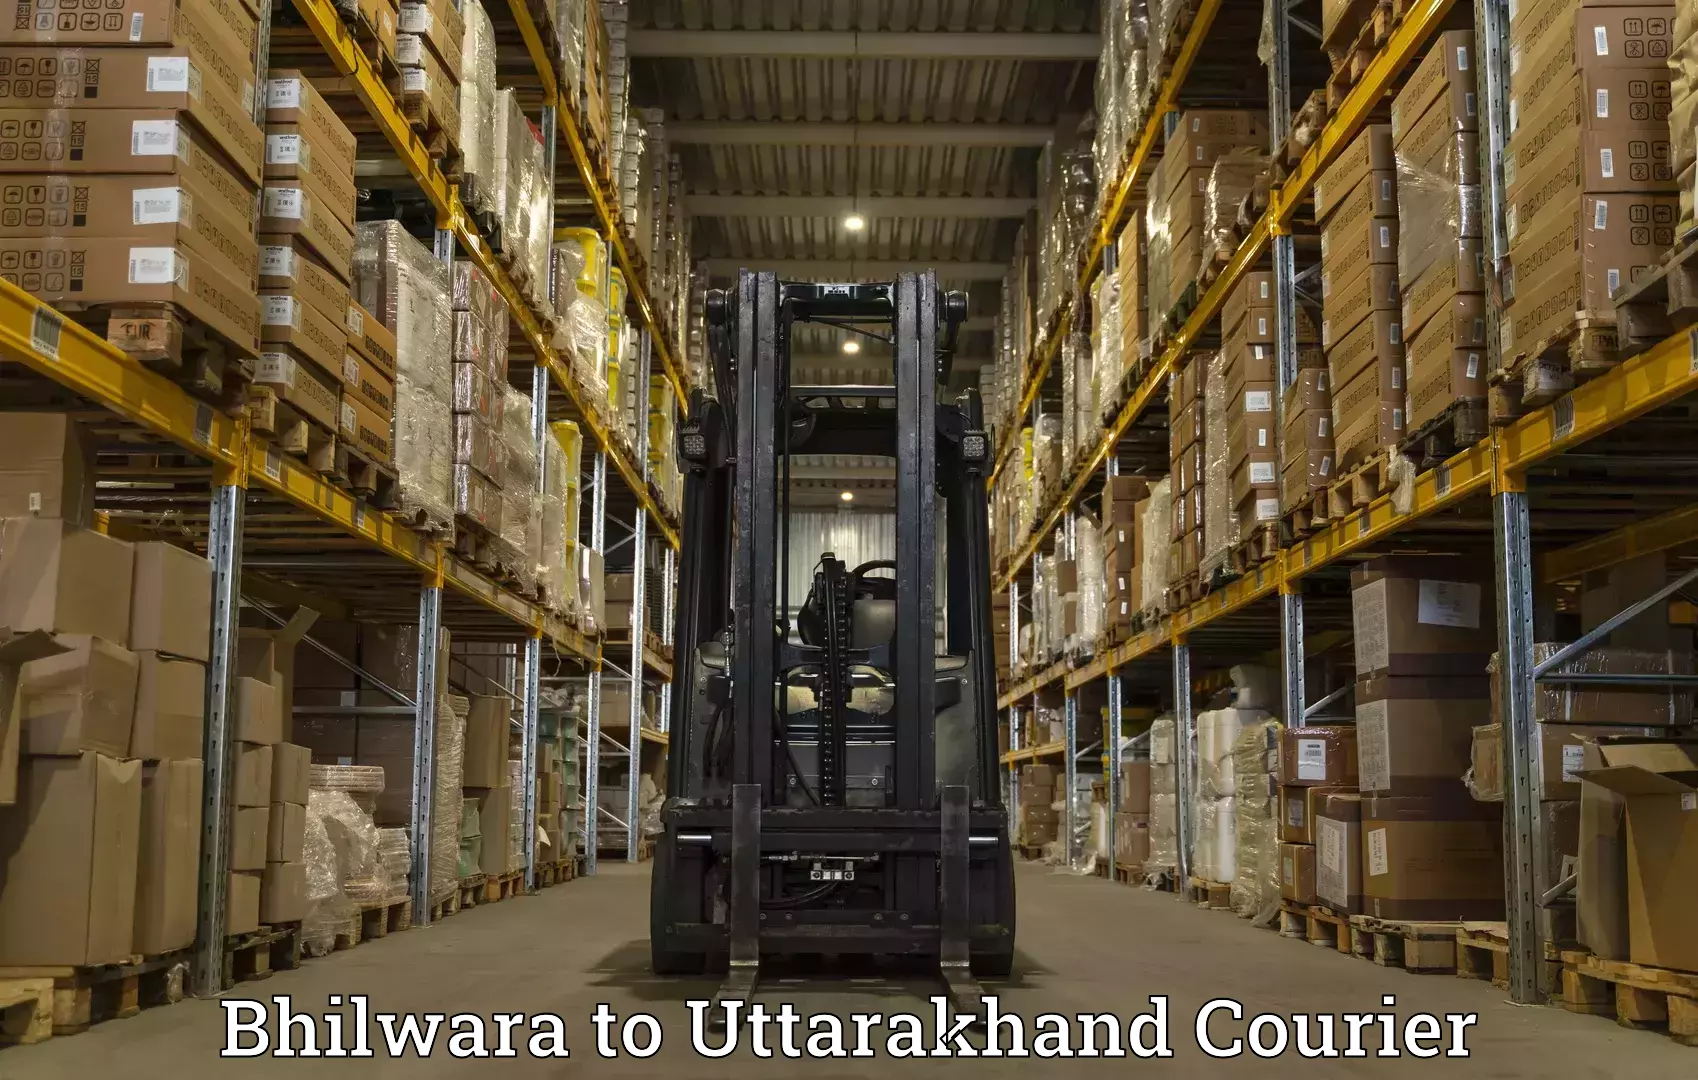 Express delivery network Bhilwara to Uttarkashi